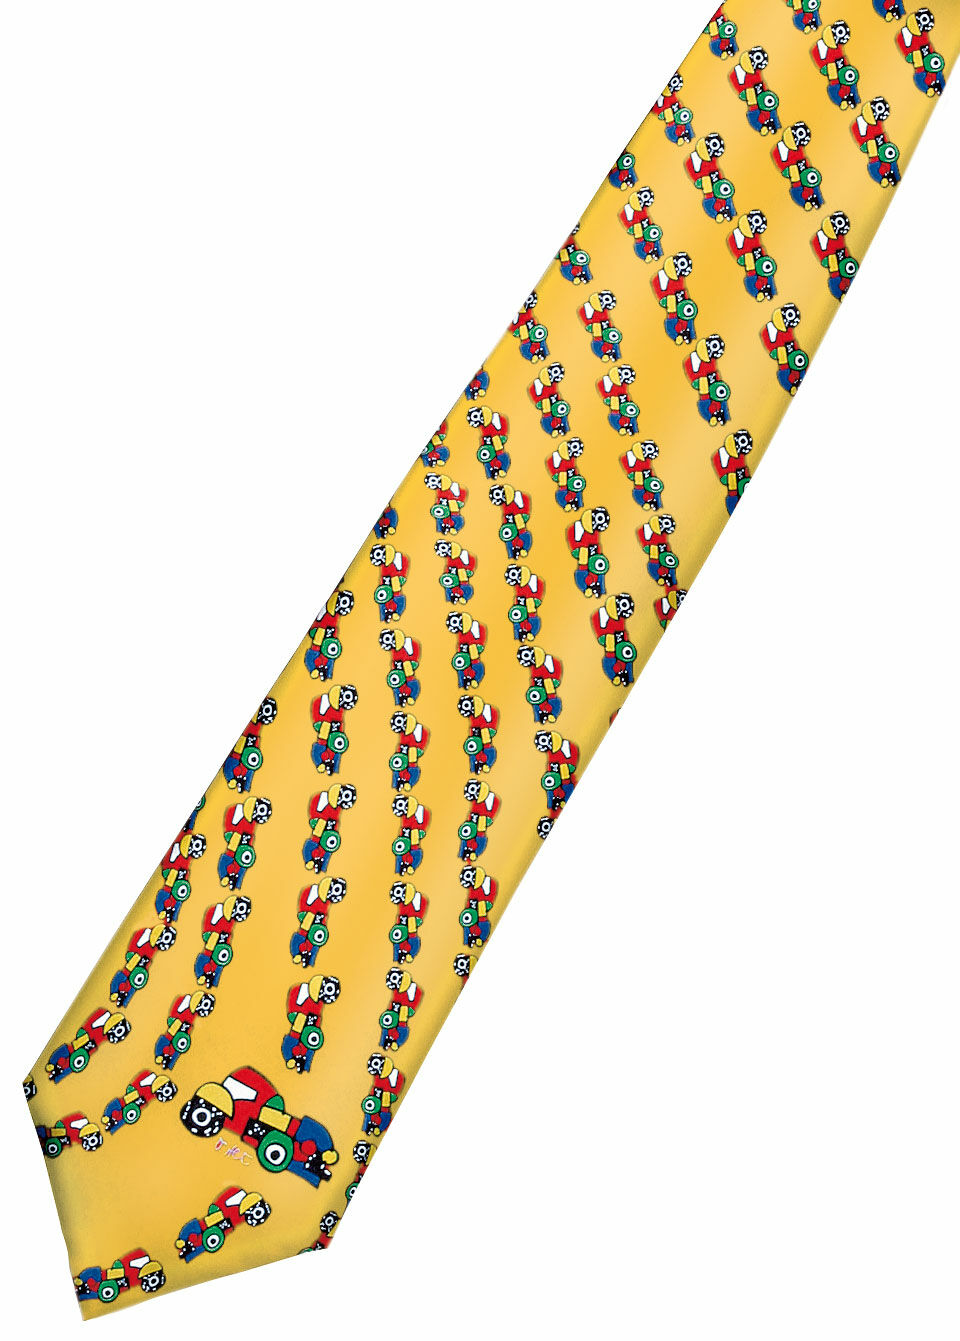 Silk tie "Roundabout", yellow version by Otmar Alt